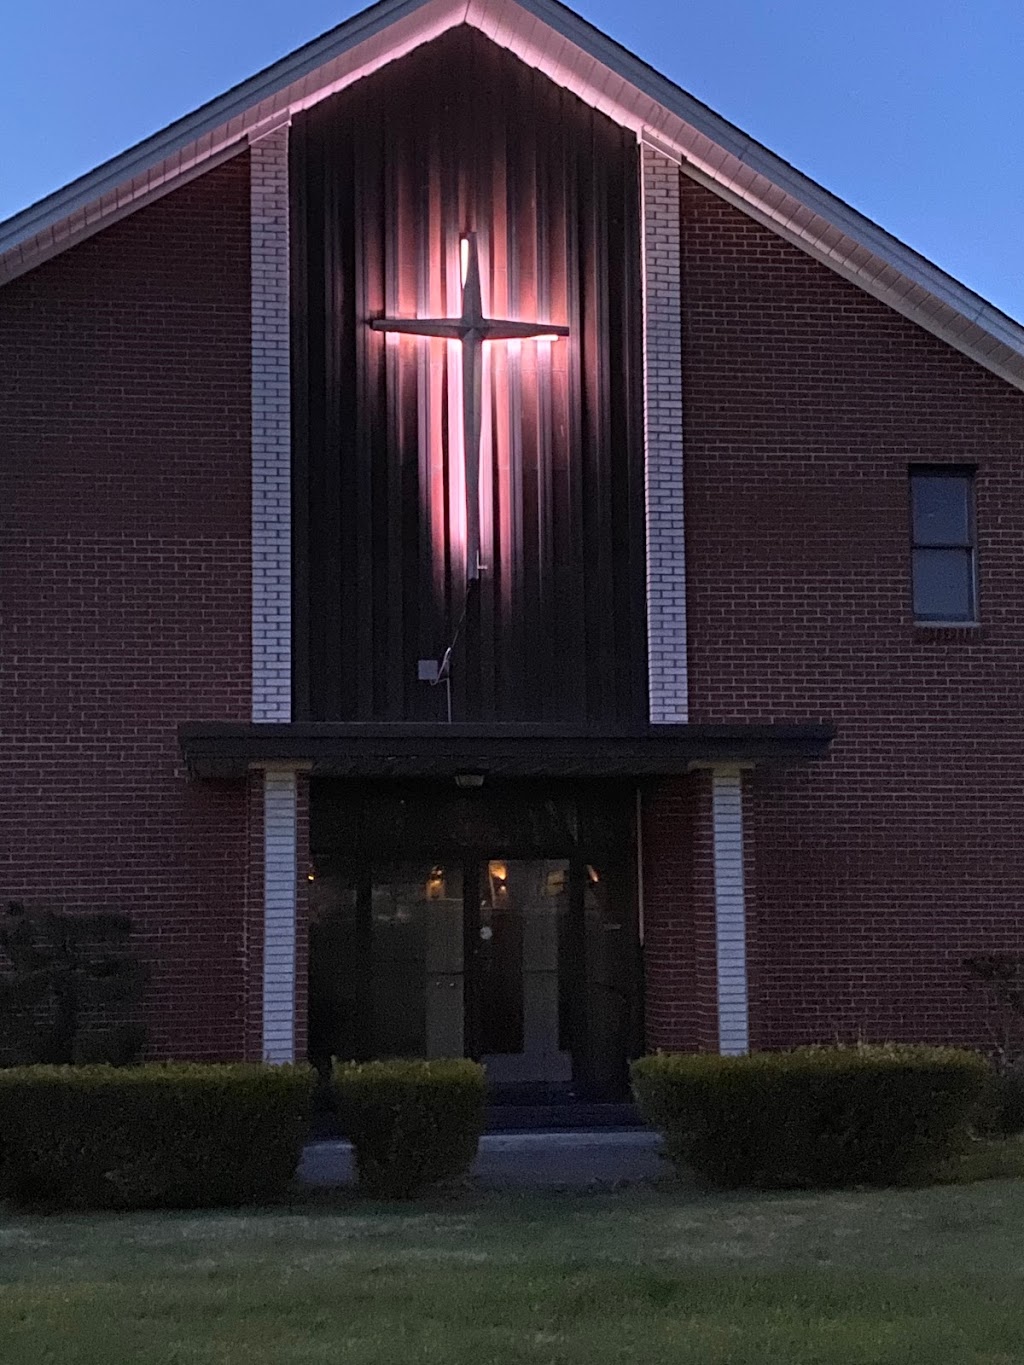 Korean Church of Lehigh Valley | 1987 Schadt Ave, Whitehall, PA 18052 | Phone: (610) 799-1987